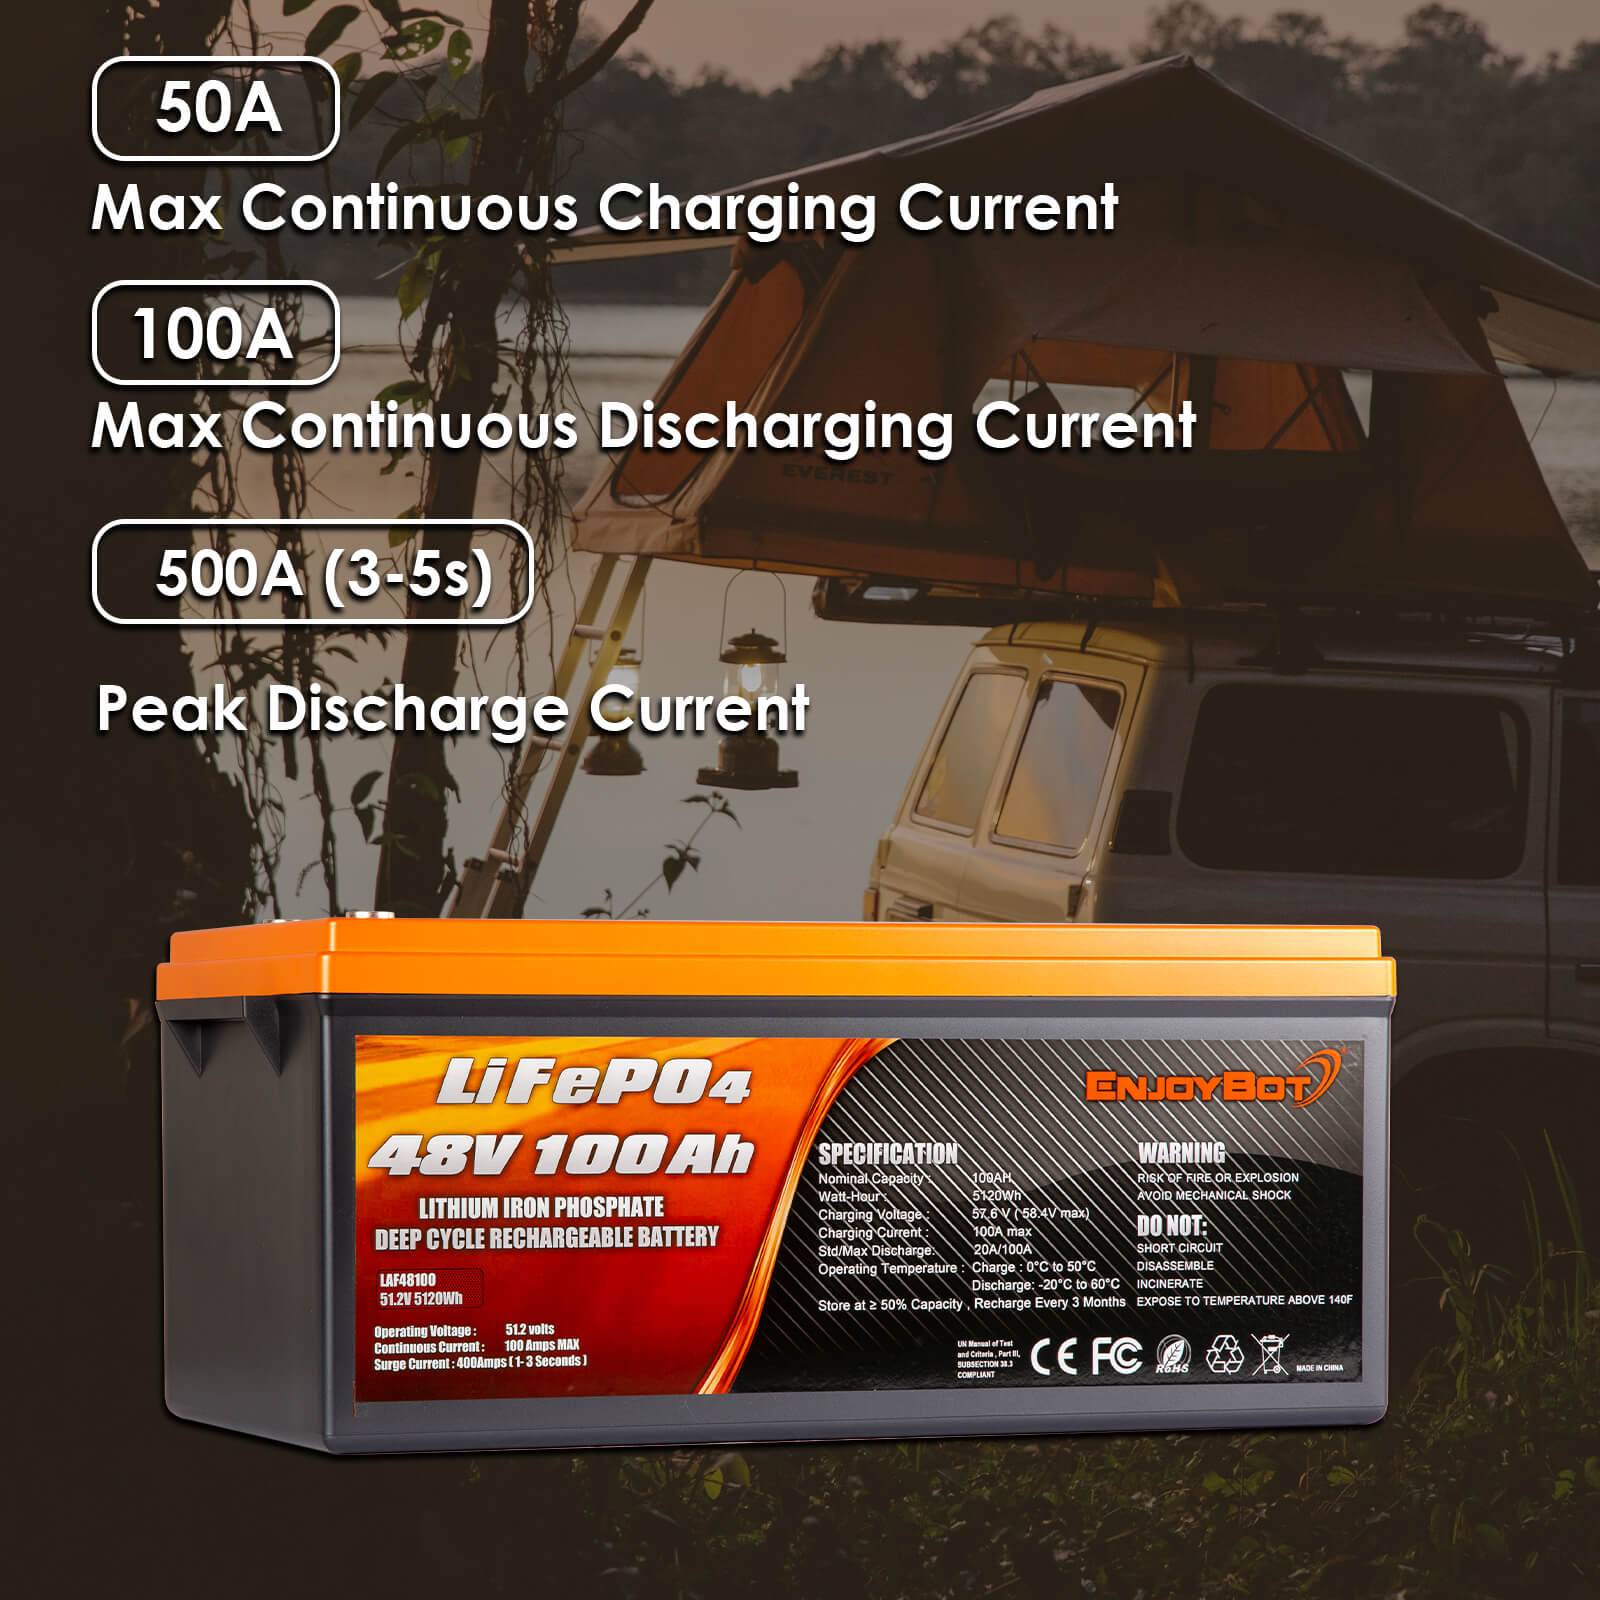 Enjoybot 48v 100ah LiFePO4 Battery - Max Current